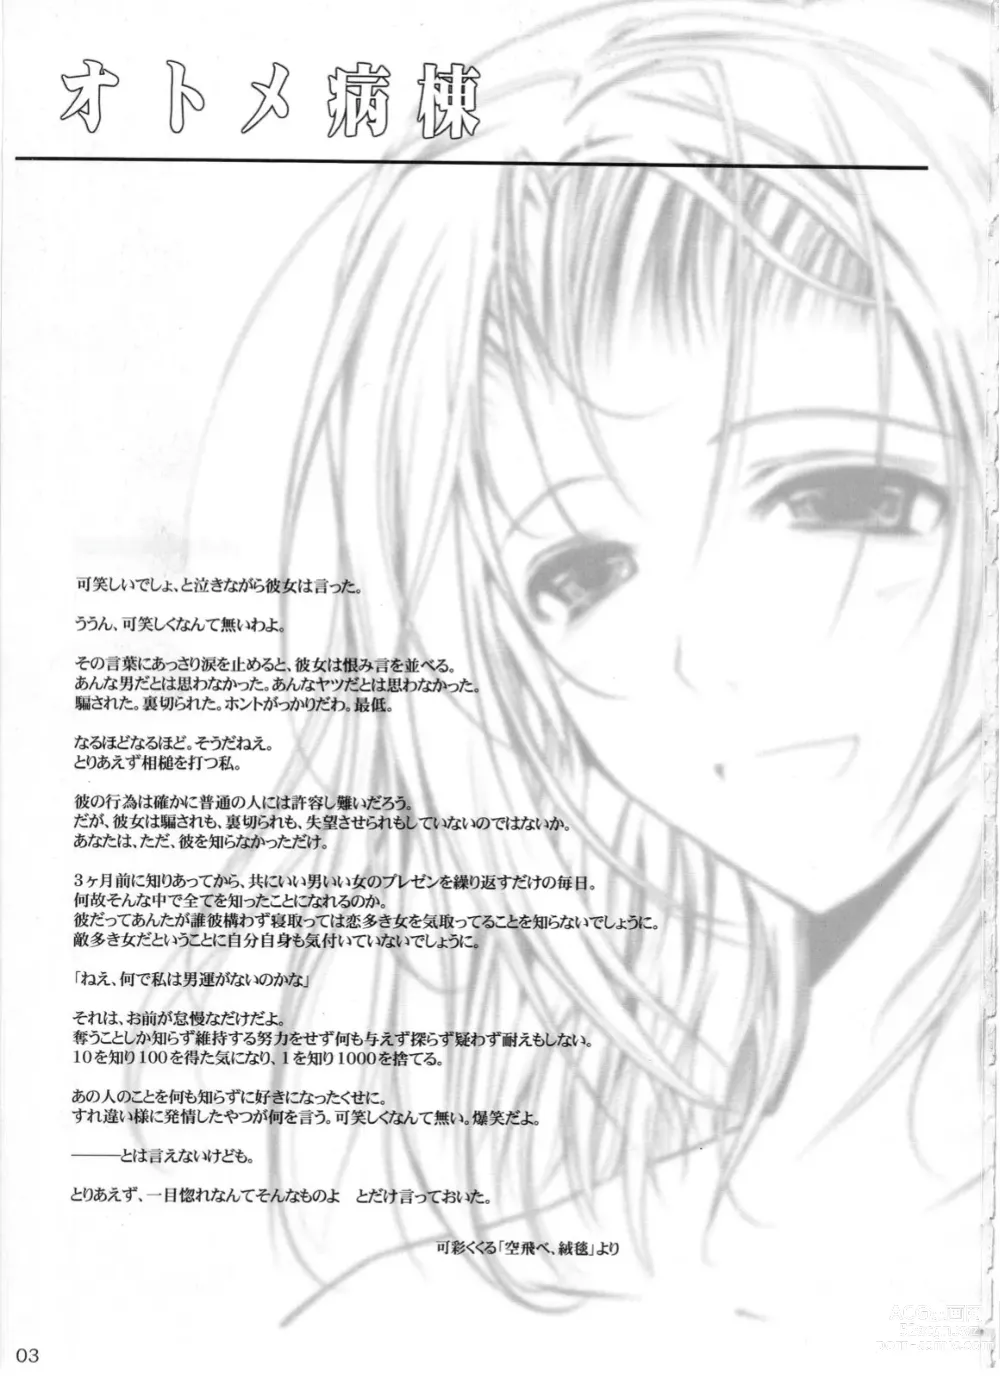 Page 2 of doujinshi Otome Byoutou